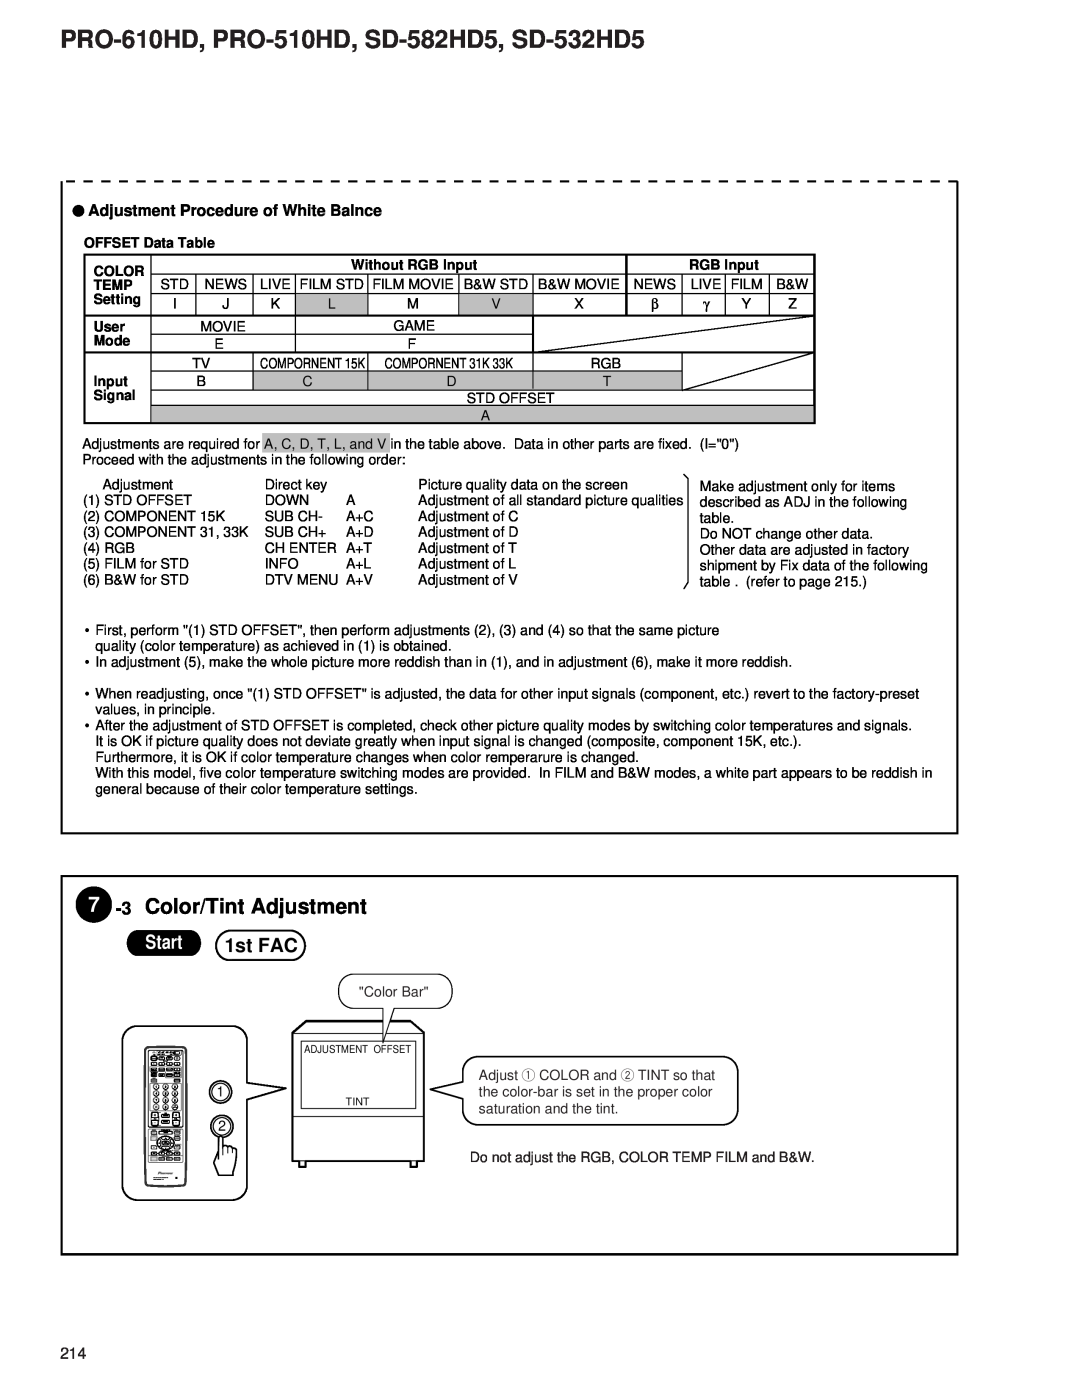 Pioneer service manual 7 -3 Color/Tint Adjustment, PRO-610HD, PRO-510HD, SD-582HD5, SD-532HD5, Start, 1st FAC 